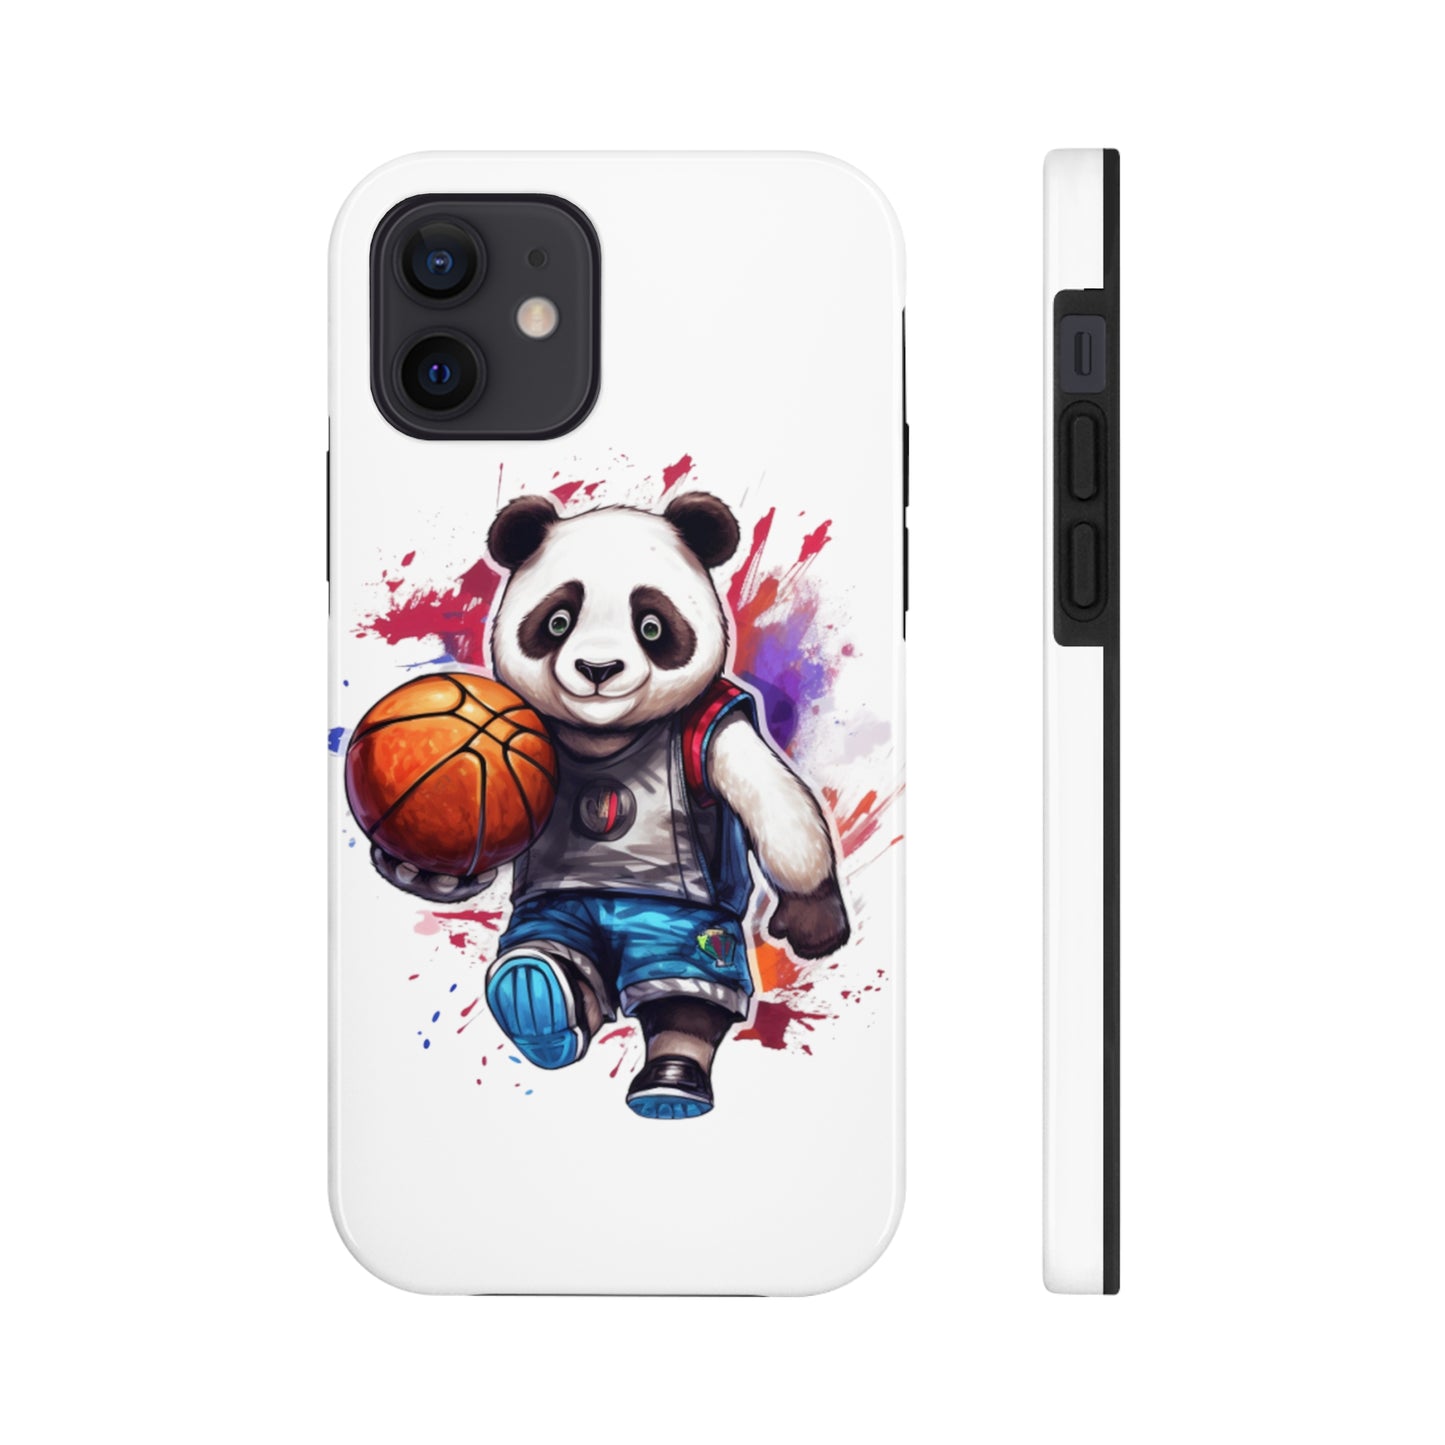 Bam-Boozled: A Sporty Comic Panda Playing Basketball with a Bamboo Ball